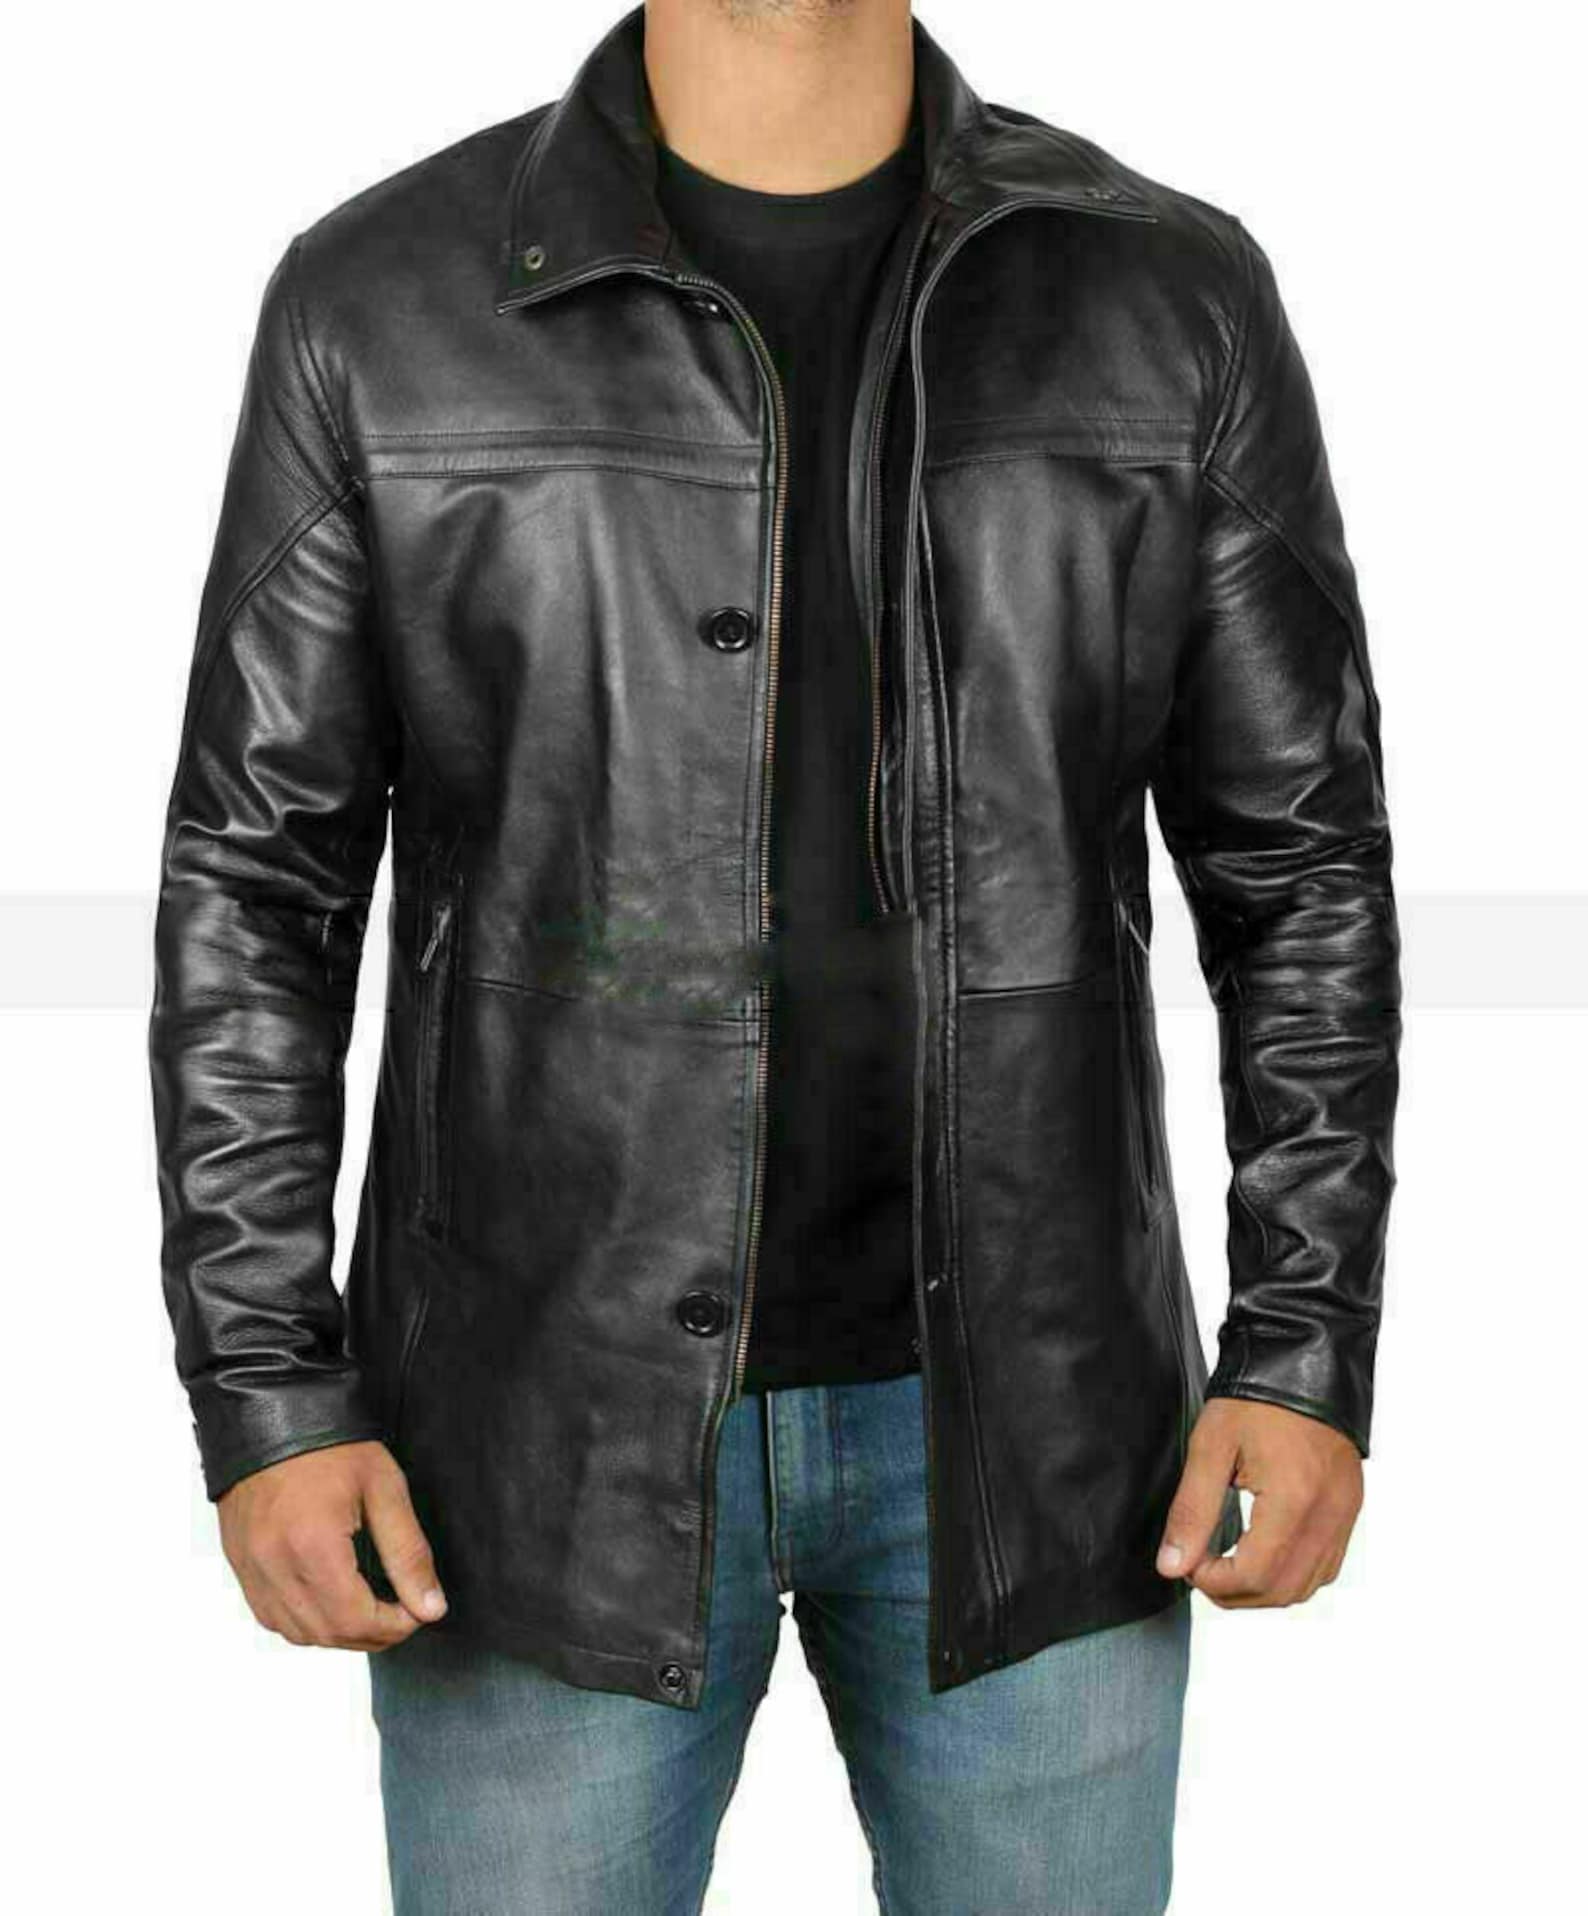 Купить куртку классику мужскую. Куртки real Lambskin. Real Leather куртки мужские. Кожаный Black Duster Coat. Куртка мужская кожаная fly53.